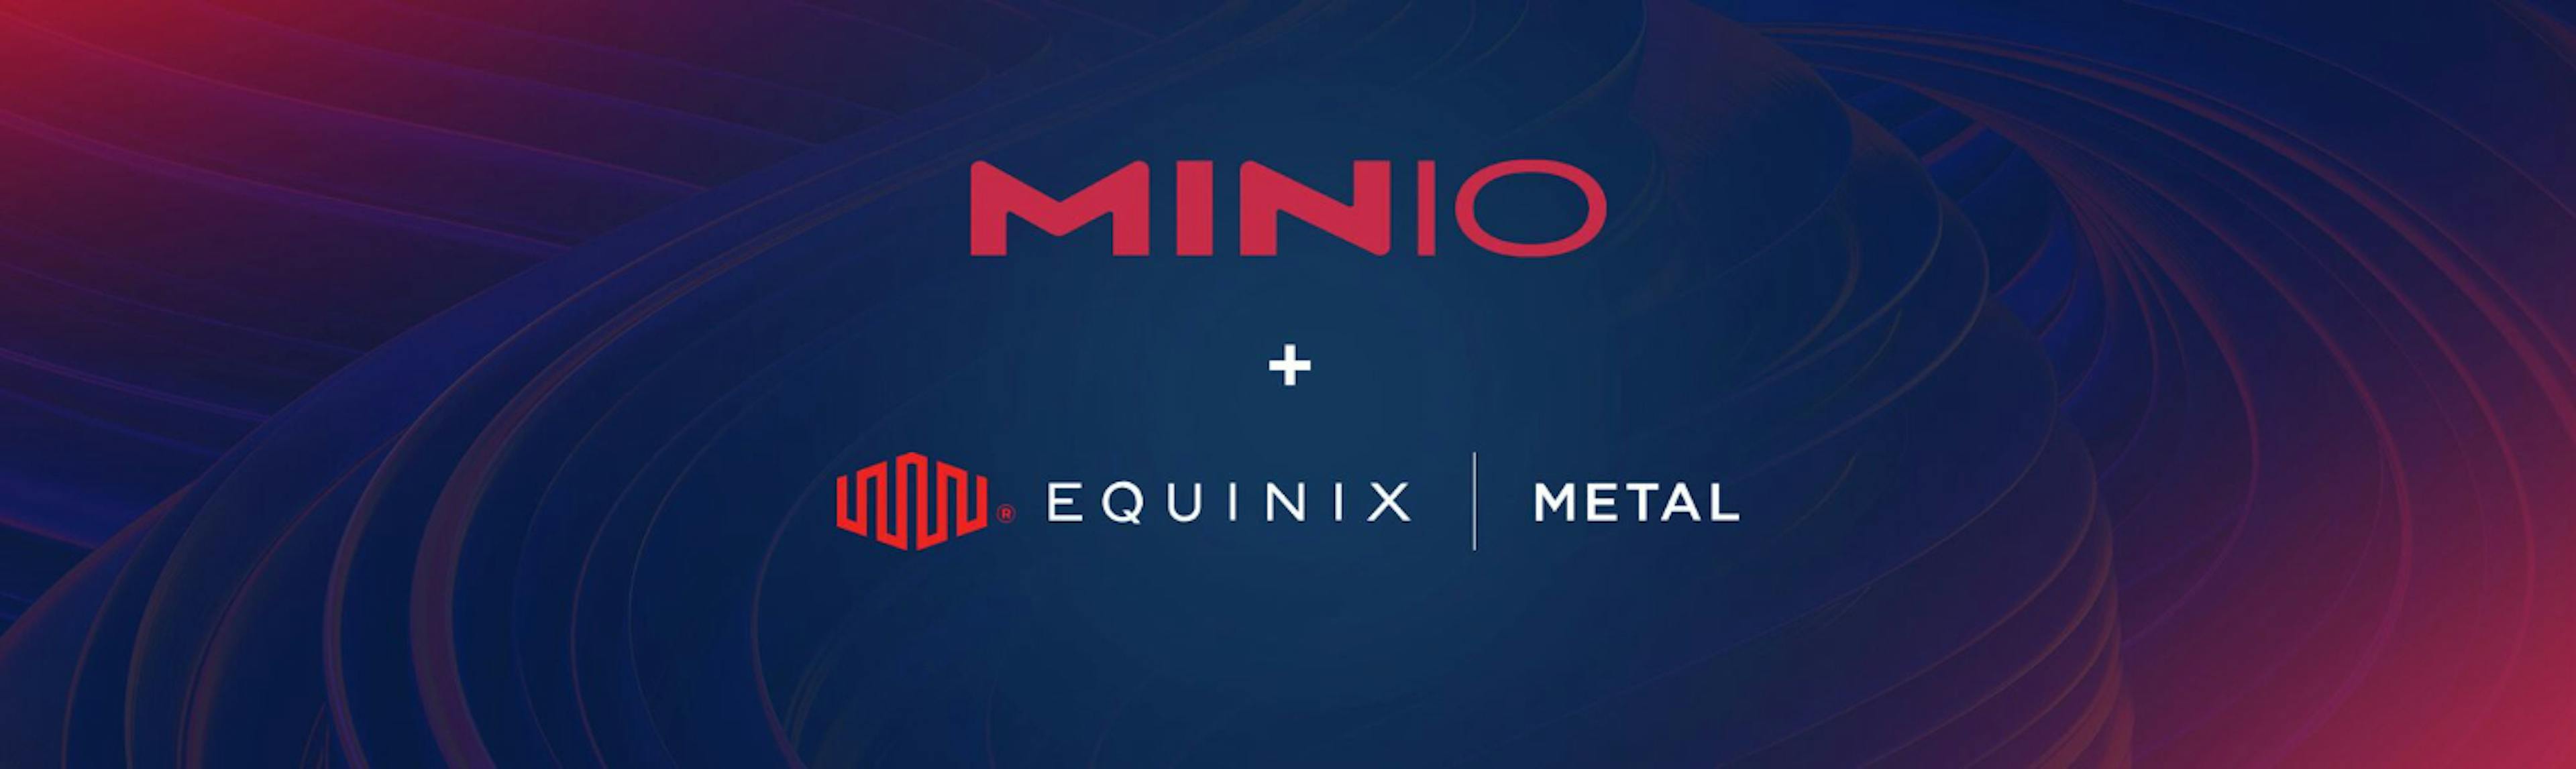 featured image - 如何在 Equinix Metal 上从 AWS S3 迁移到 MinIO